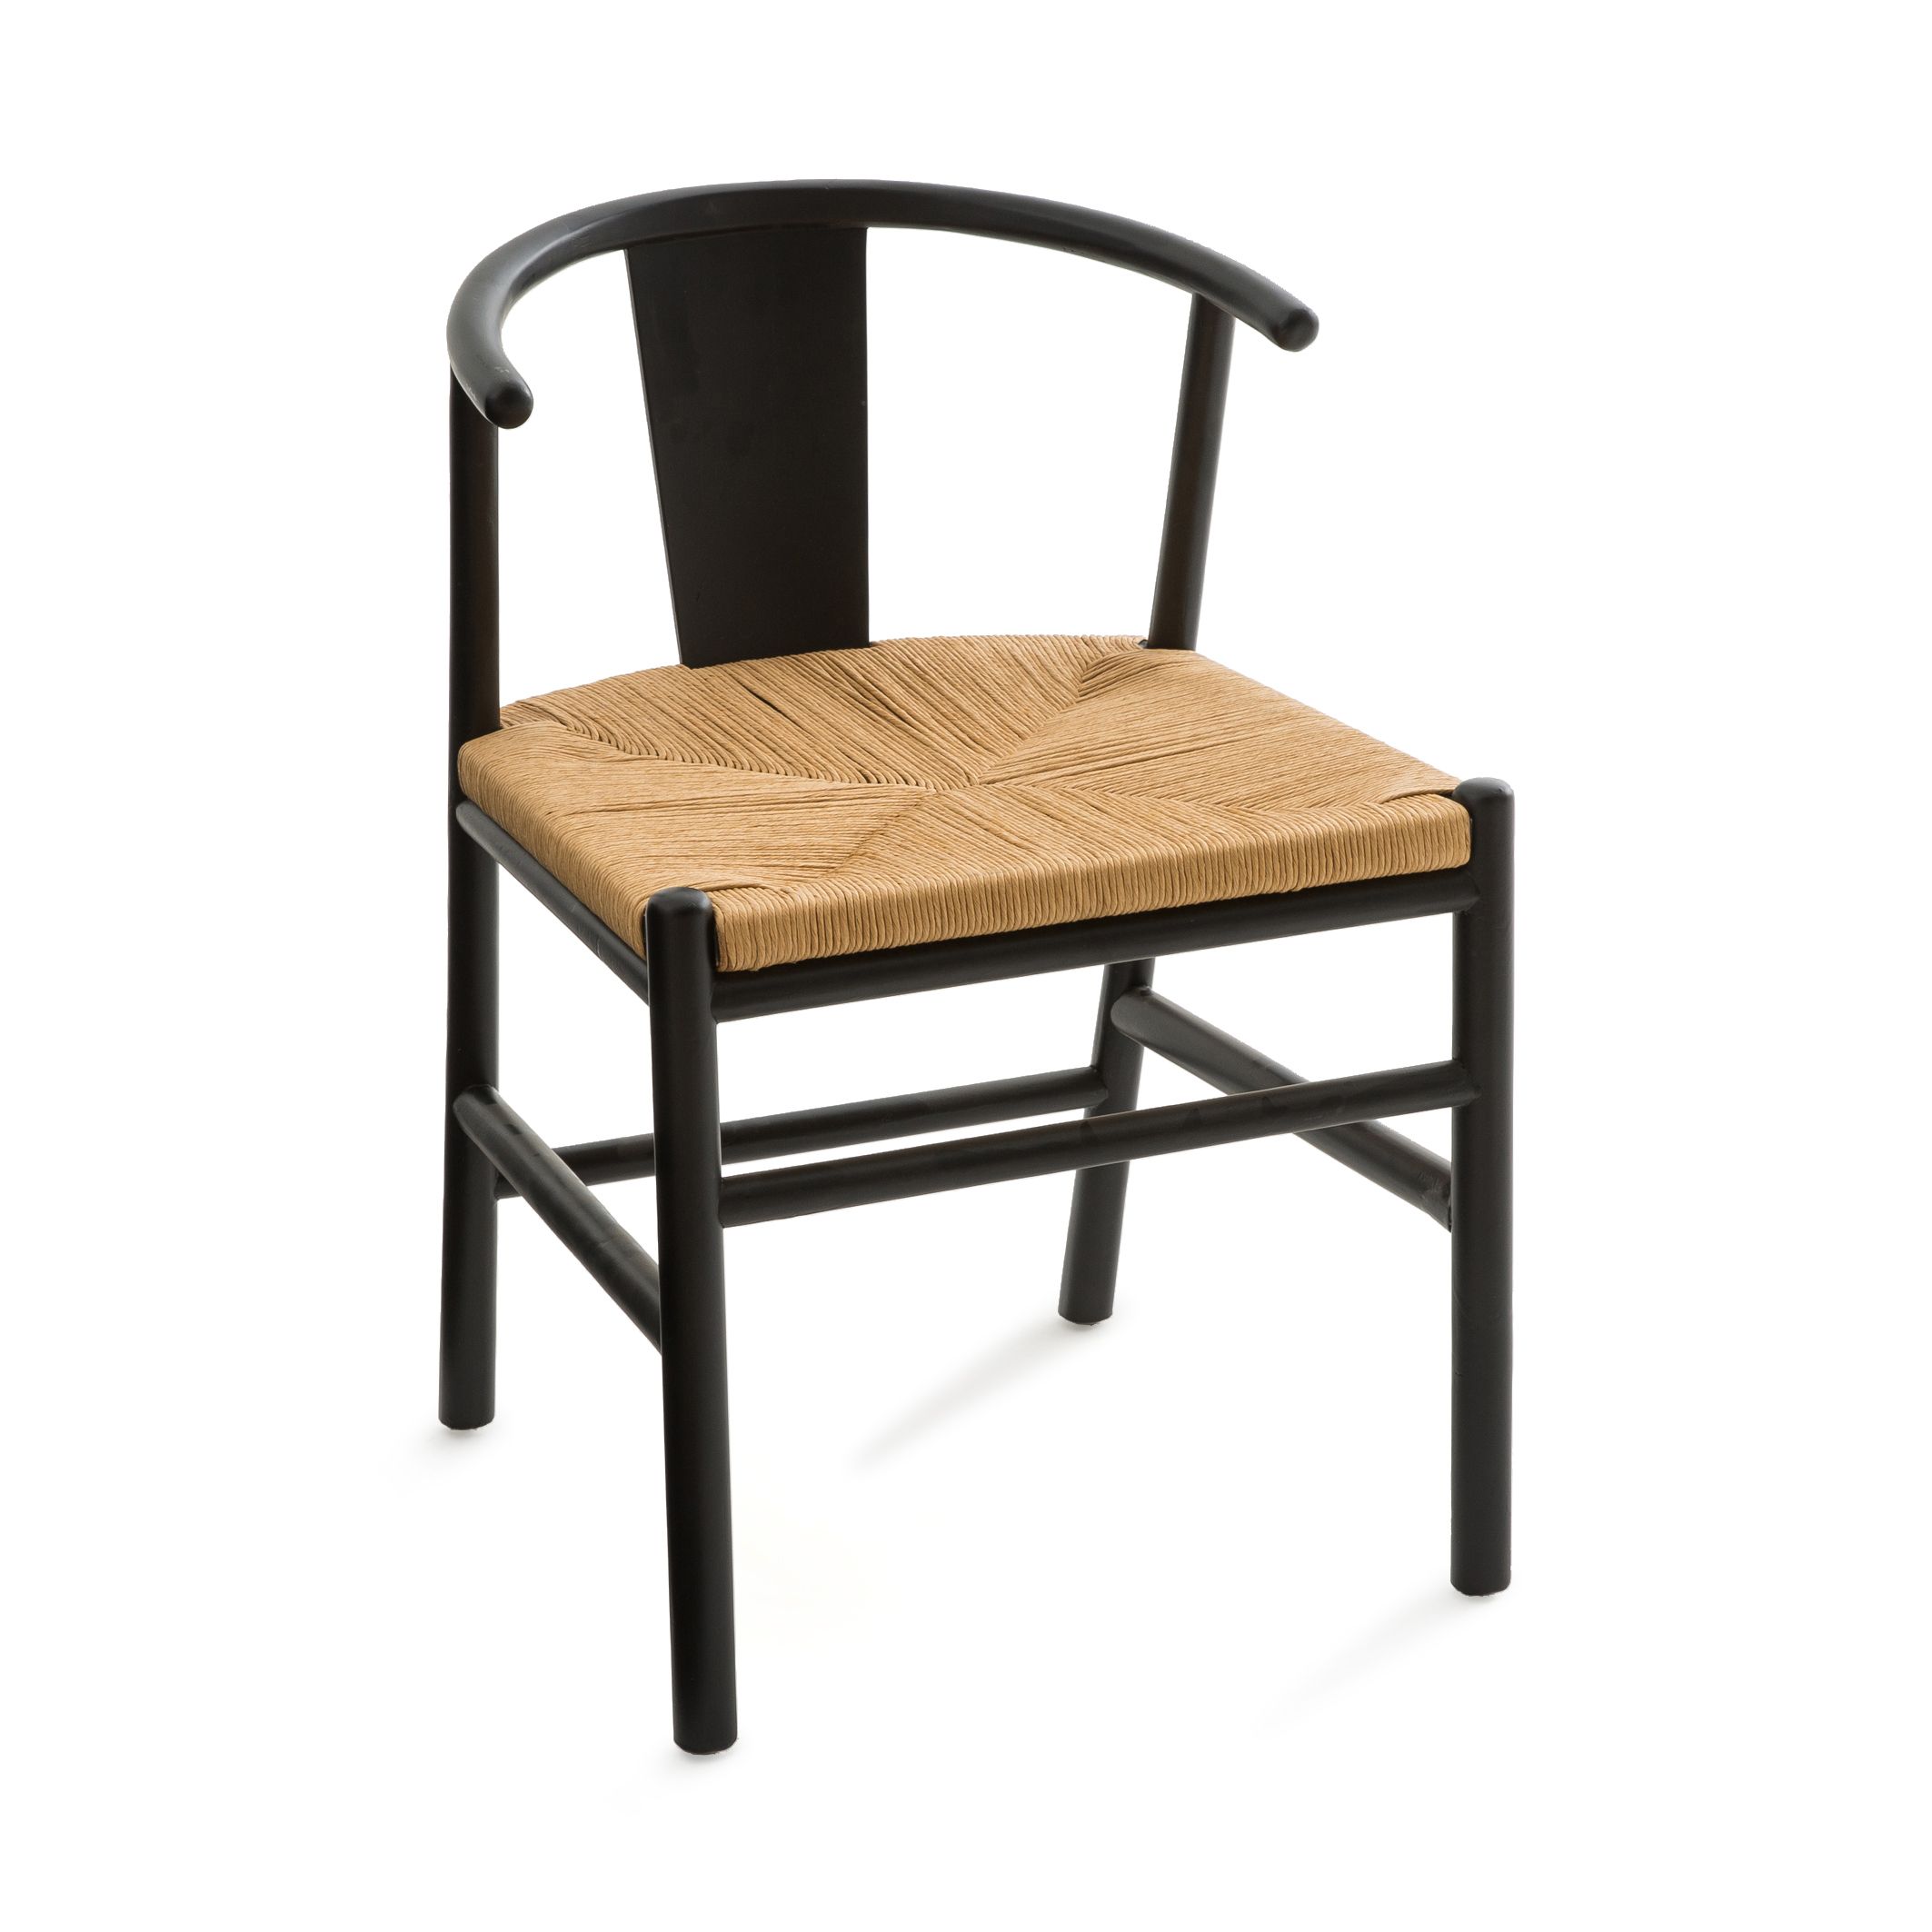 Kirsti Birch Chair with Woven Seat | La Redoute (UK)